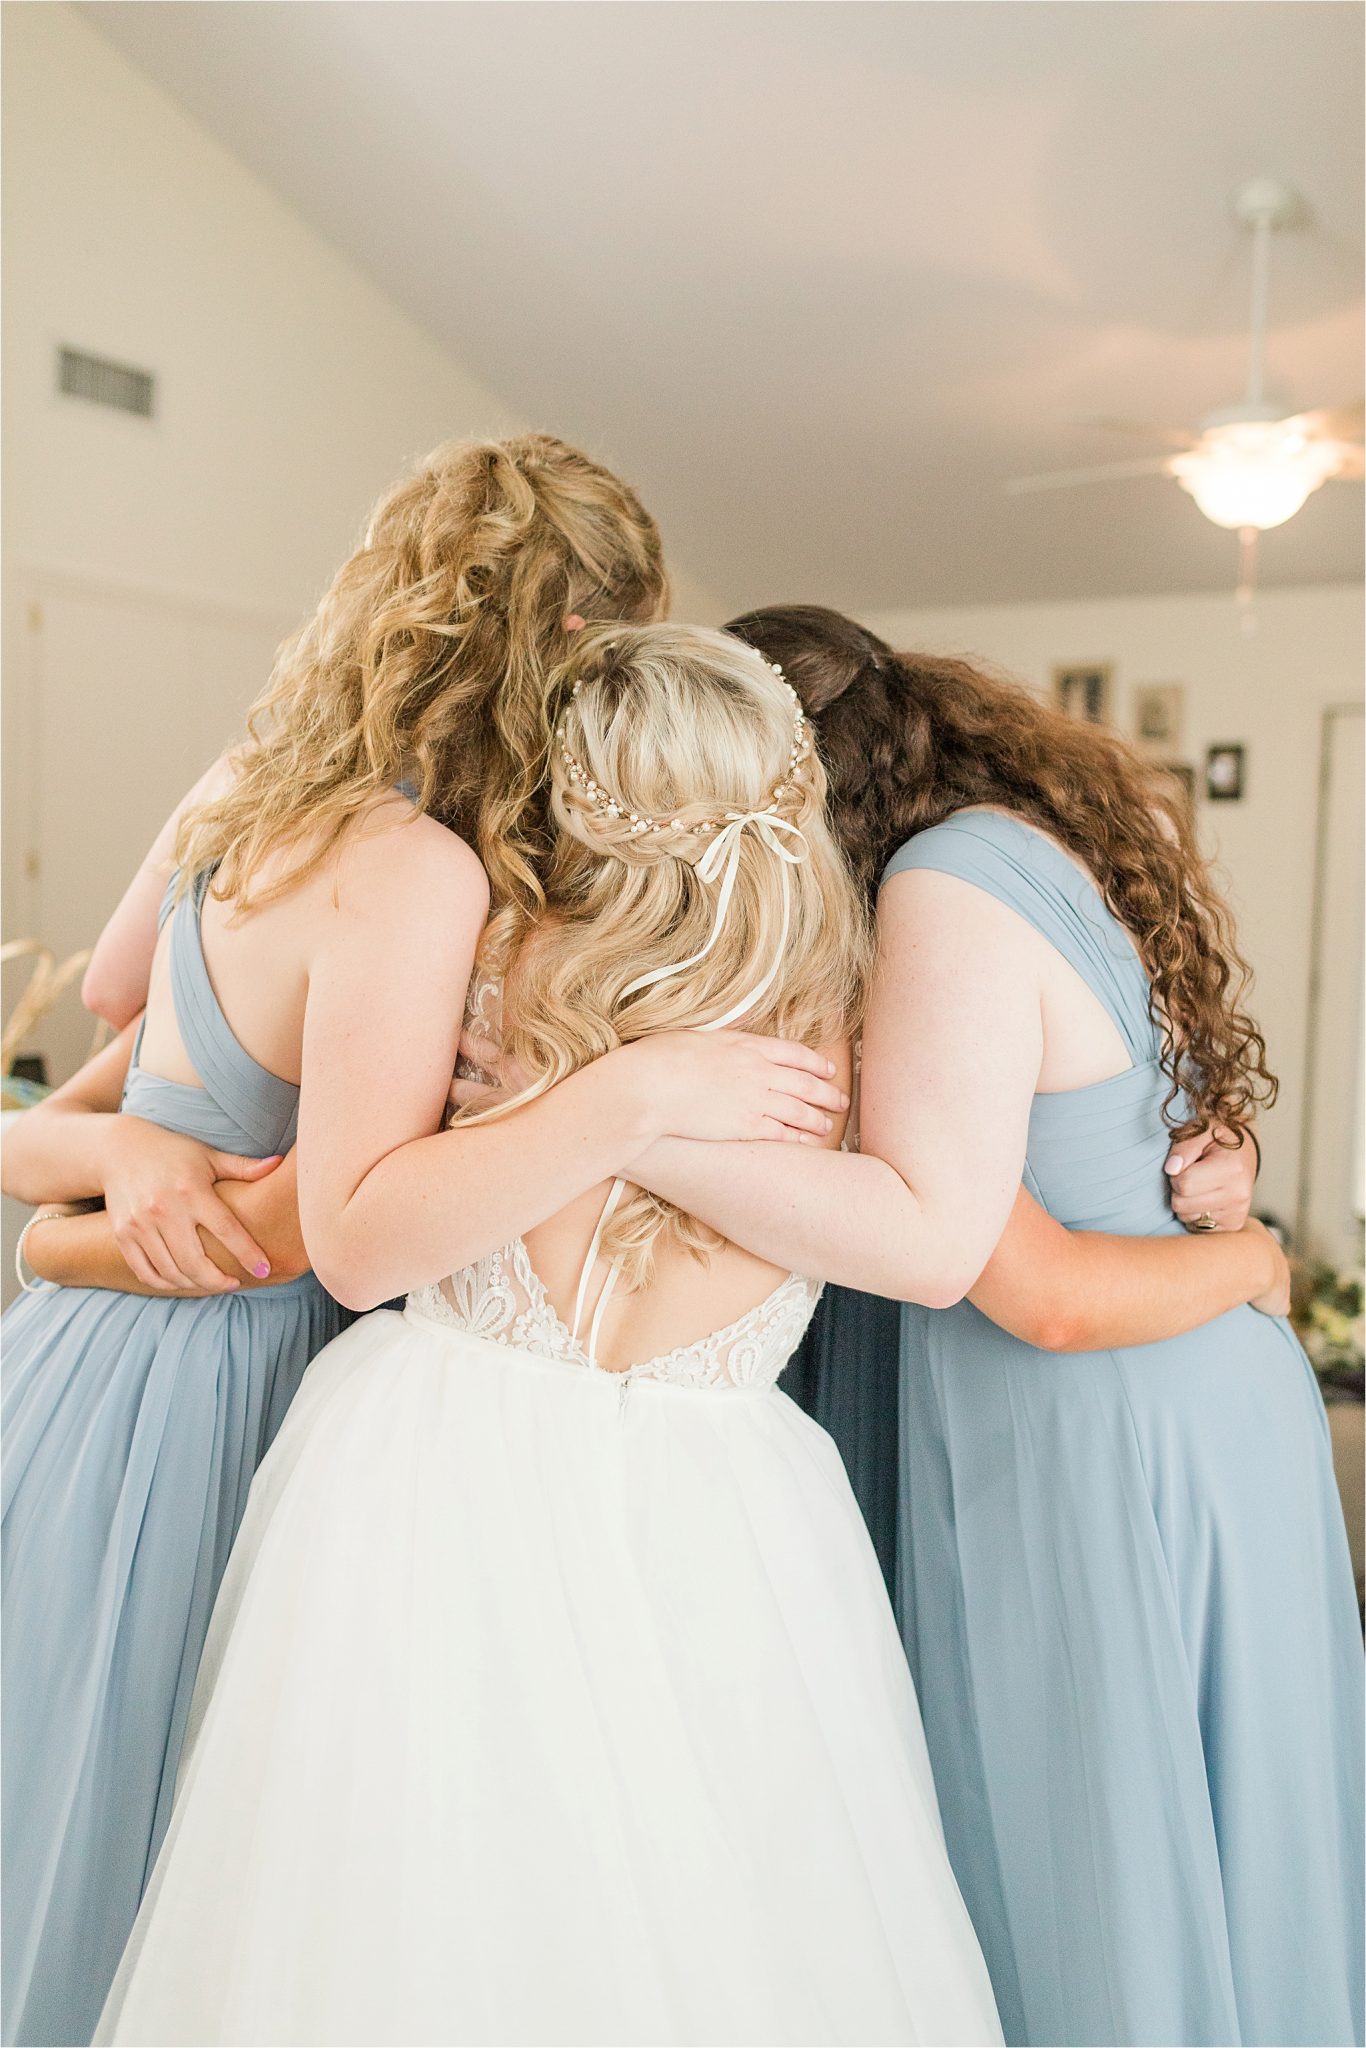 bride-bridesmaids-precious-moments-periwinkle-dusty-light-blue-wedding-cute-photo-ideas